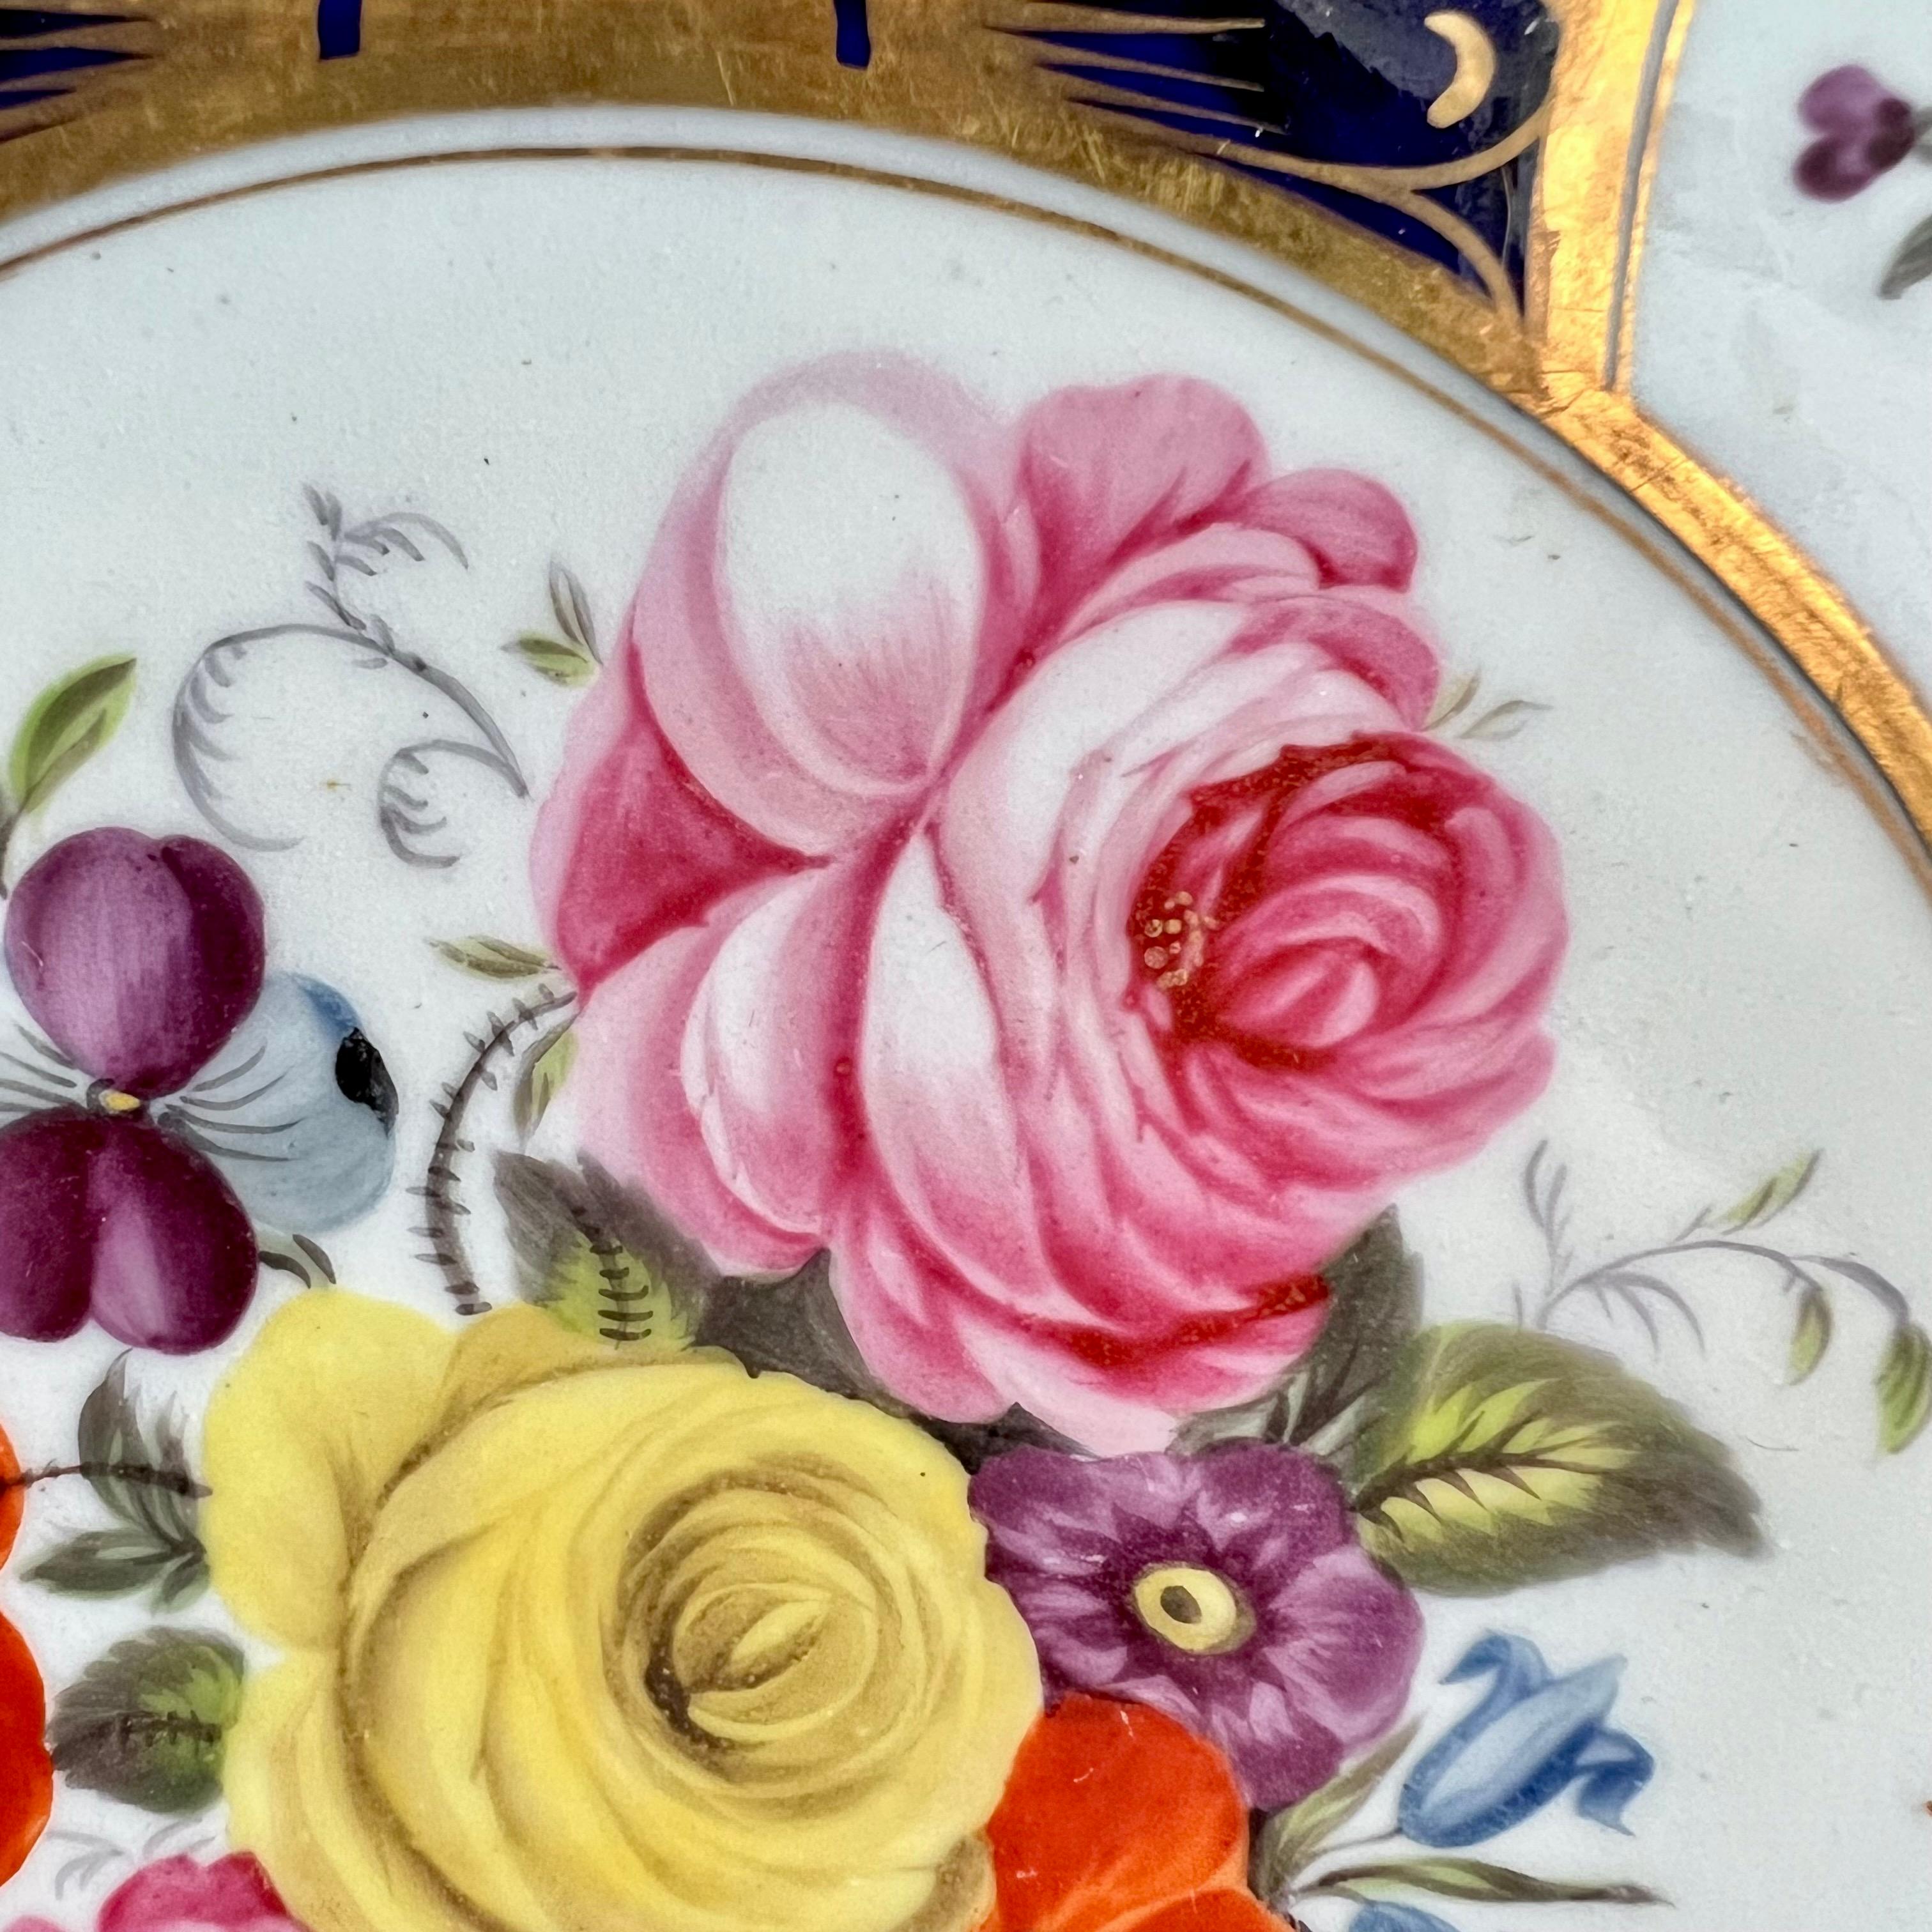 English Coalport John Rose Porcelain Plate, Cobalt Blue and Flowers, ca 1805